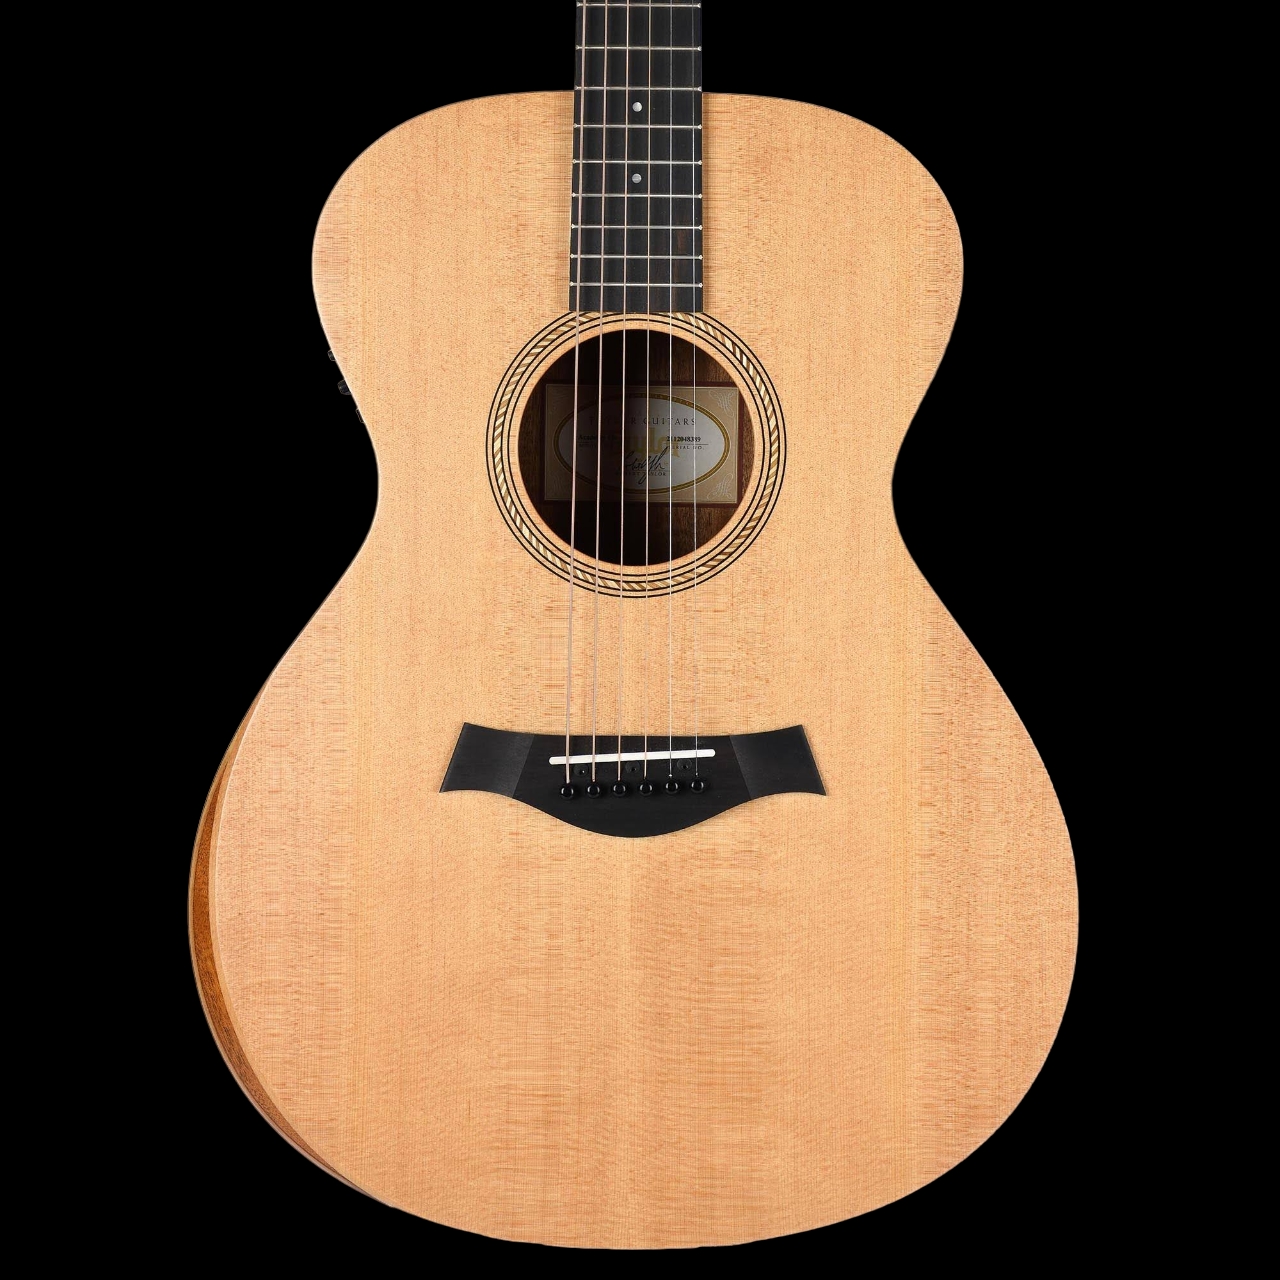 Taylor Academy 12e Acoustic Guitar